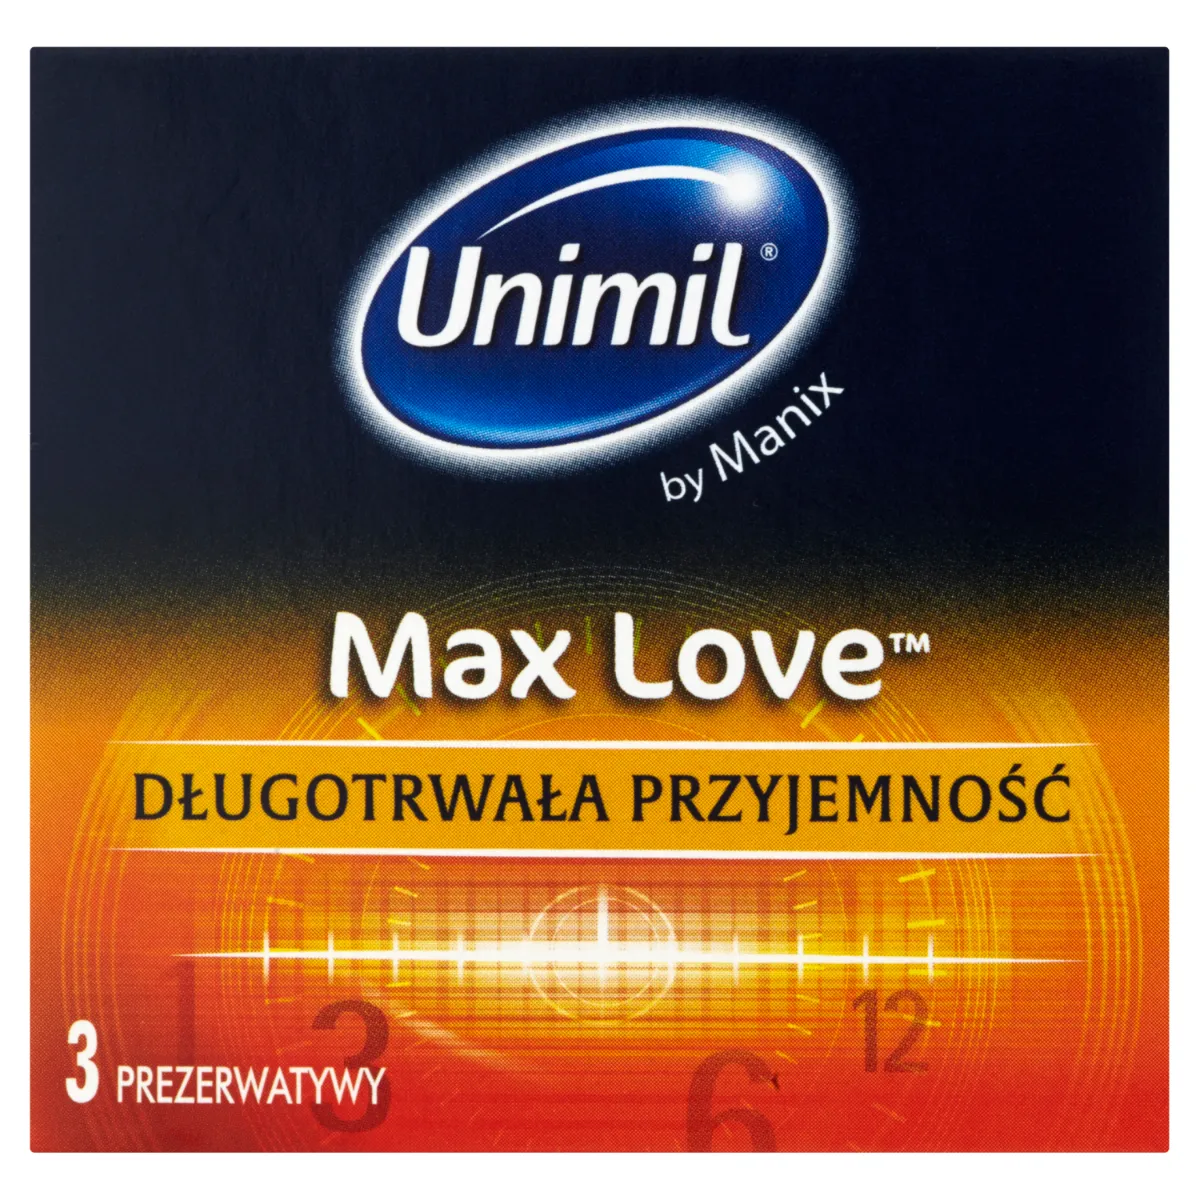 Unimil Max Love, prezerwatywy, 3 sztuki